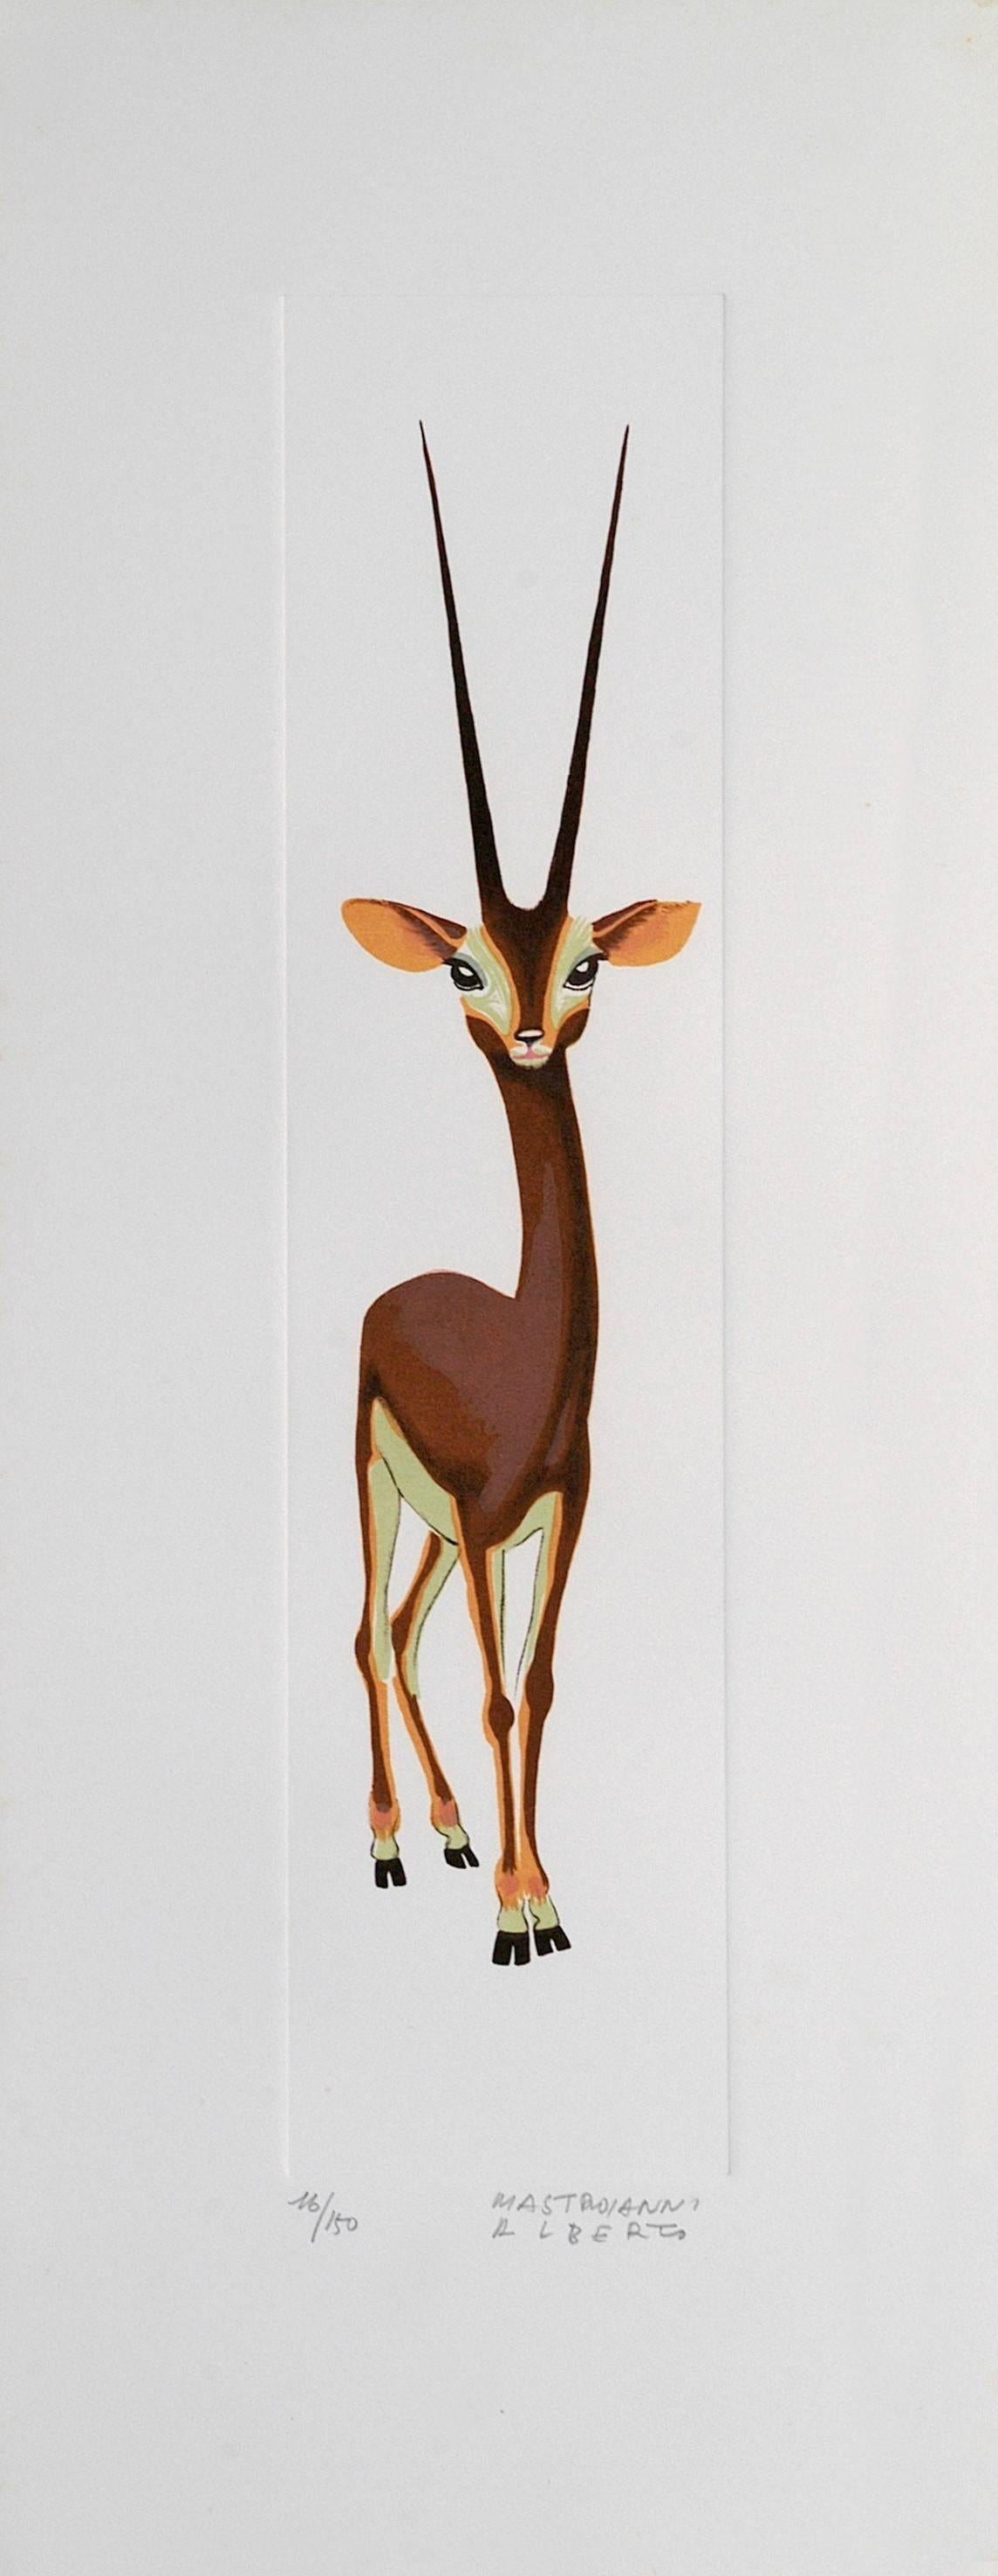 Gazelle - Original Lithograph by A. Mastroianni - 1970s